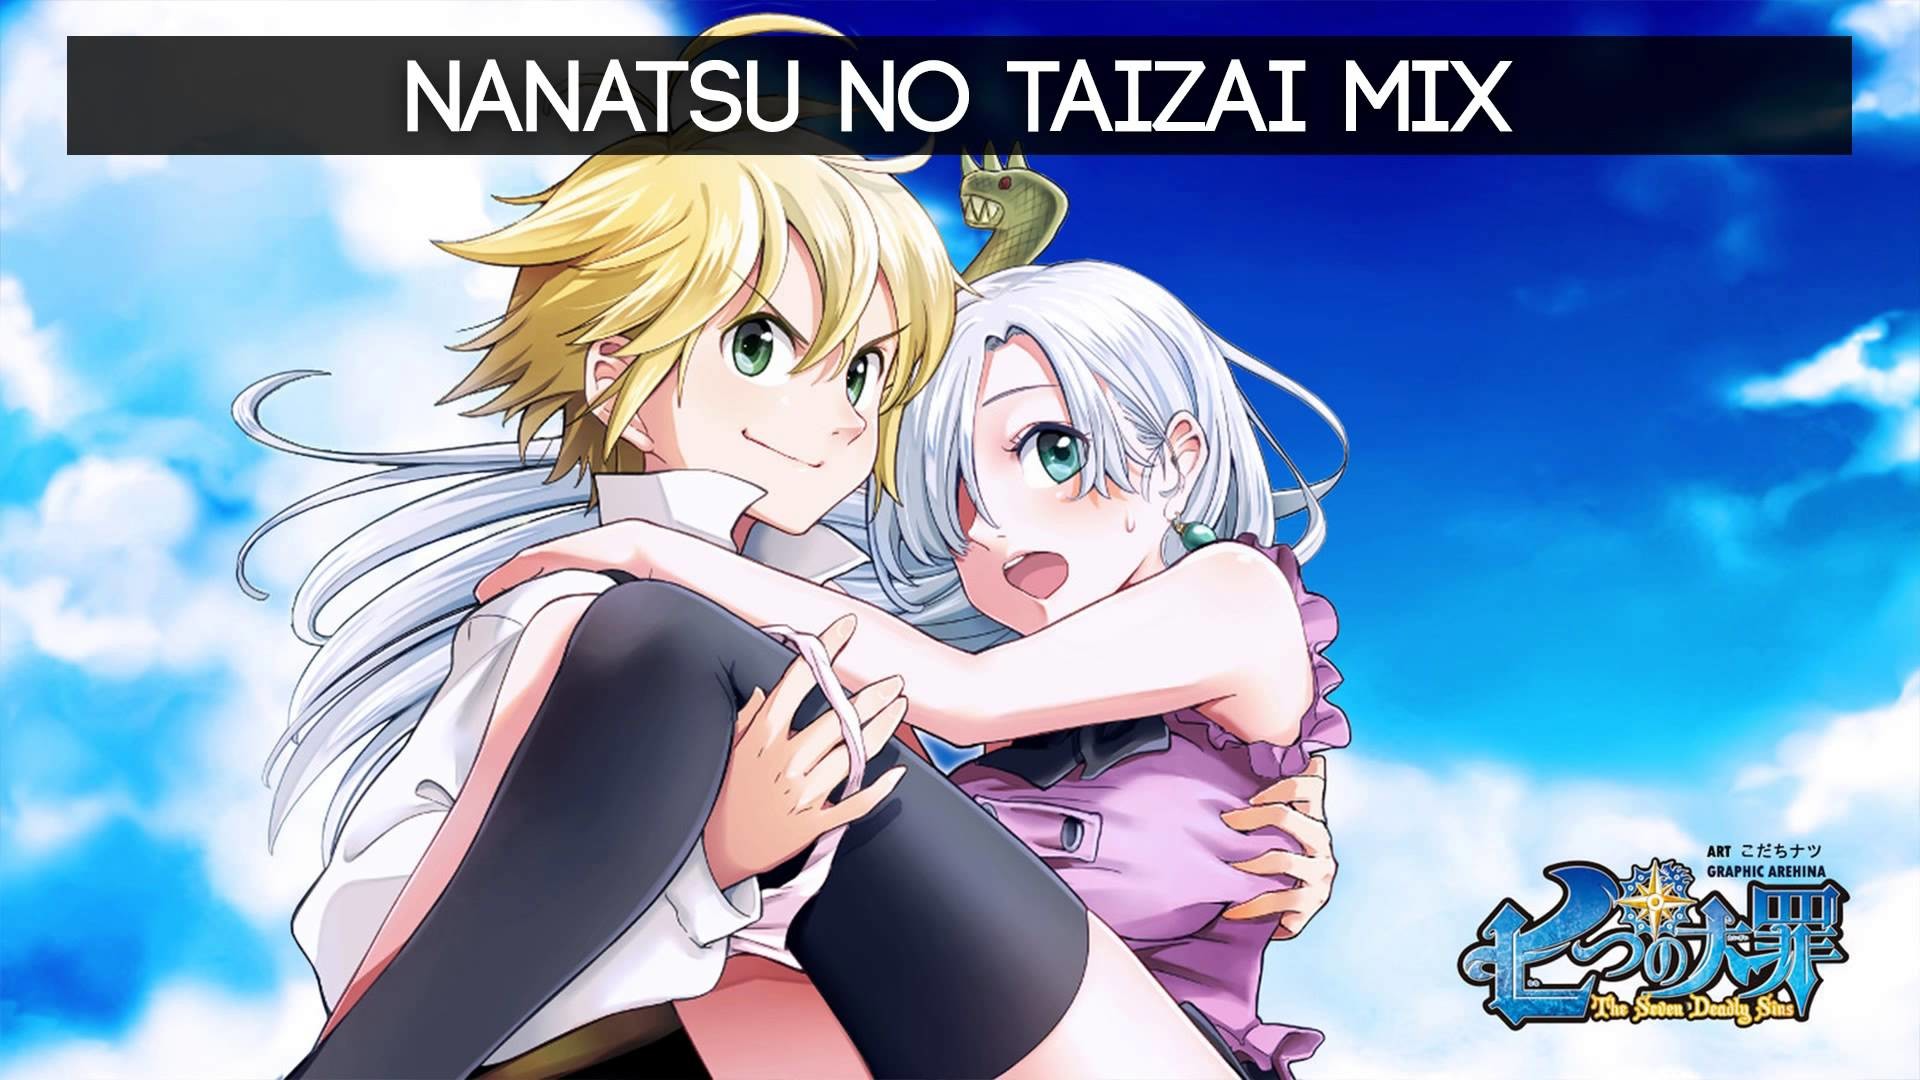 1920x1080 Best of The Seven Deadly Sins - Nanatsu no Taizai - ä¸ã¤ã®å¤§ç½ª Soundtrack OST  Mix ã®ç¥æ²ï¼BGMé - YouTube